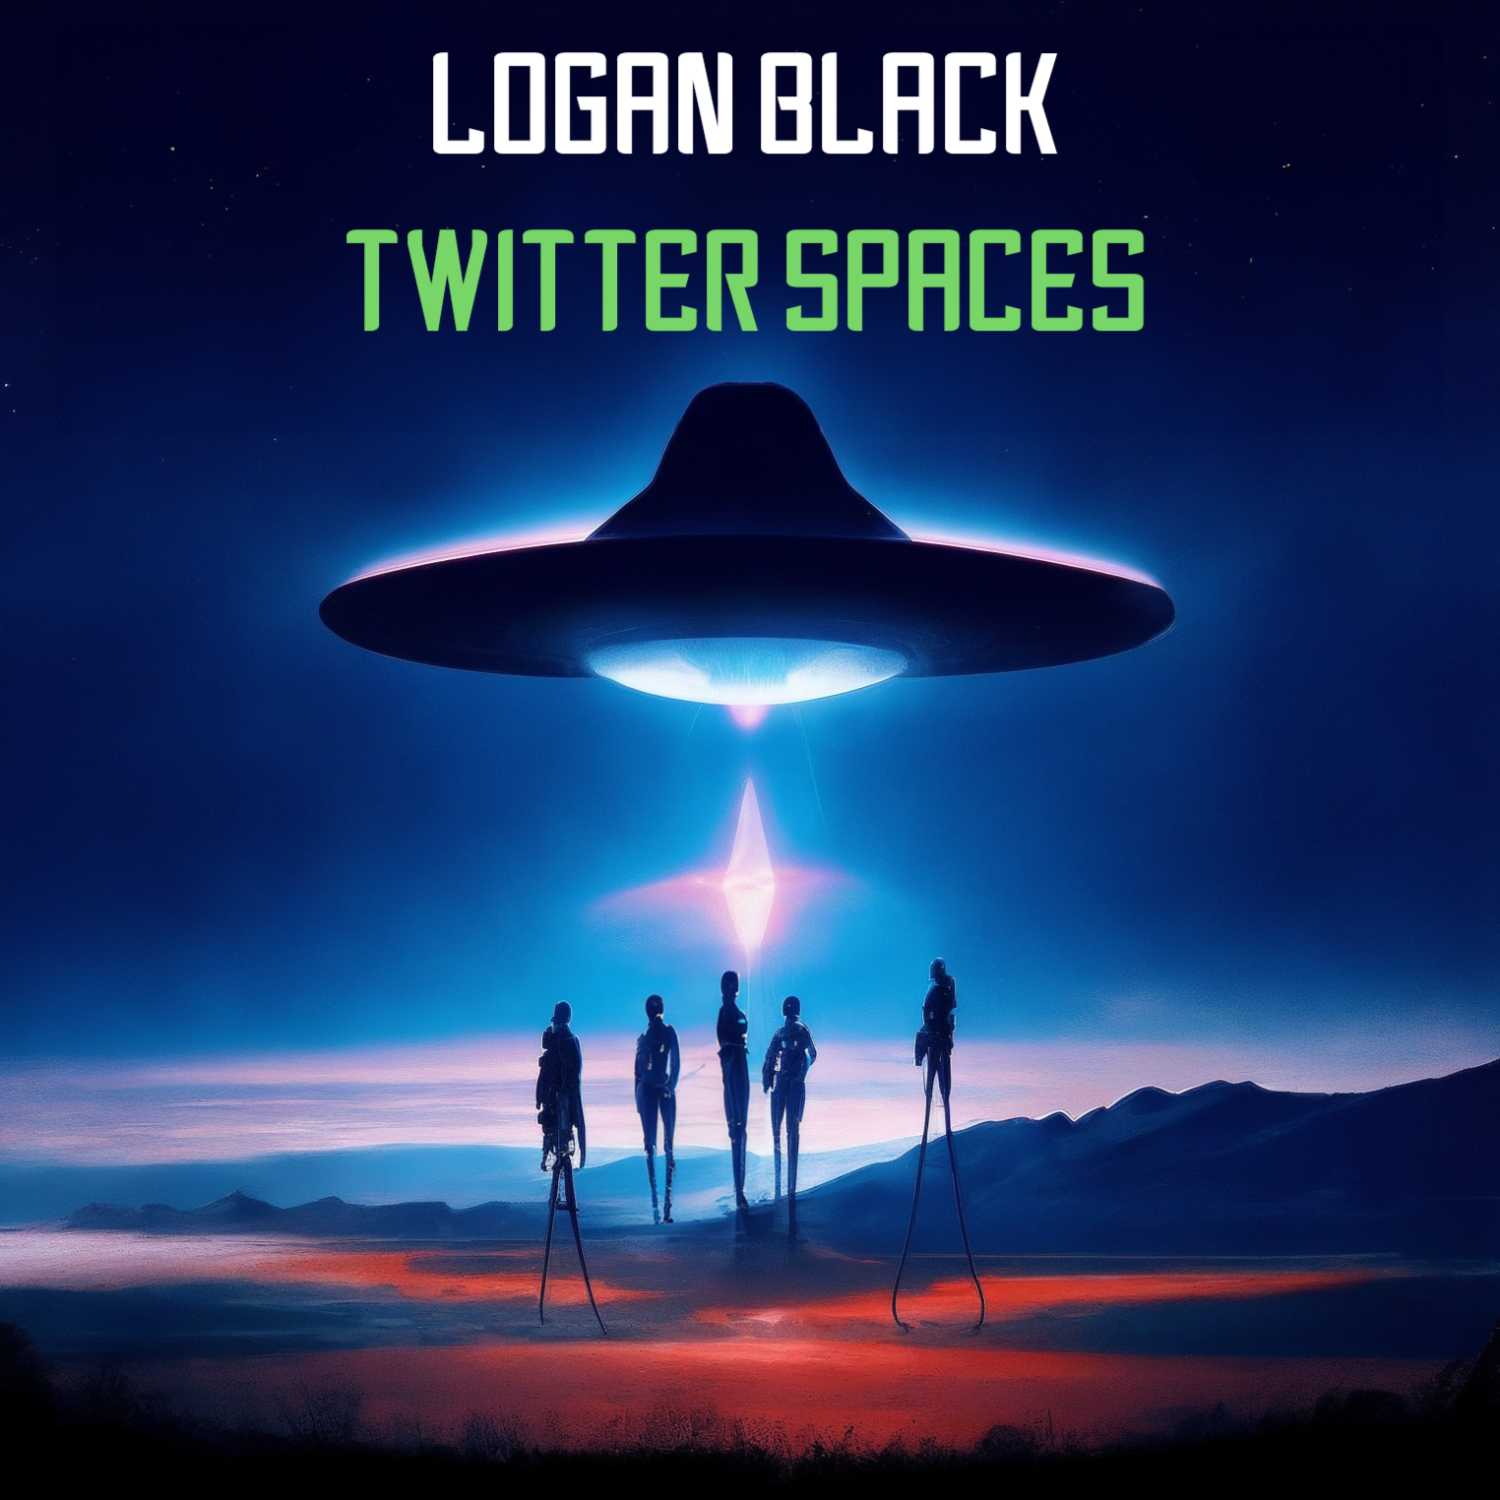 Logan Black Twitter Space